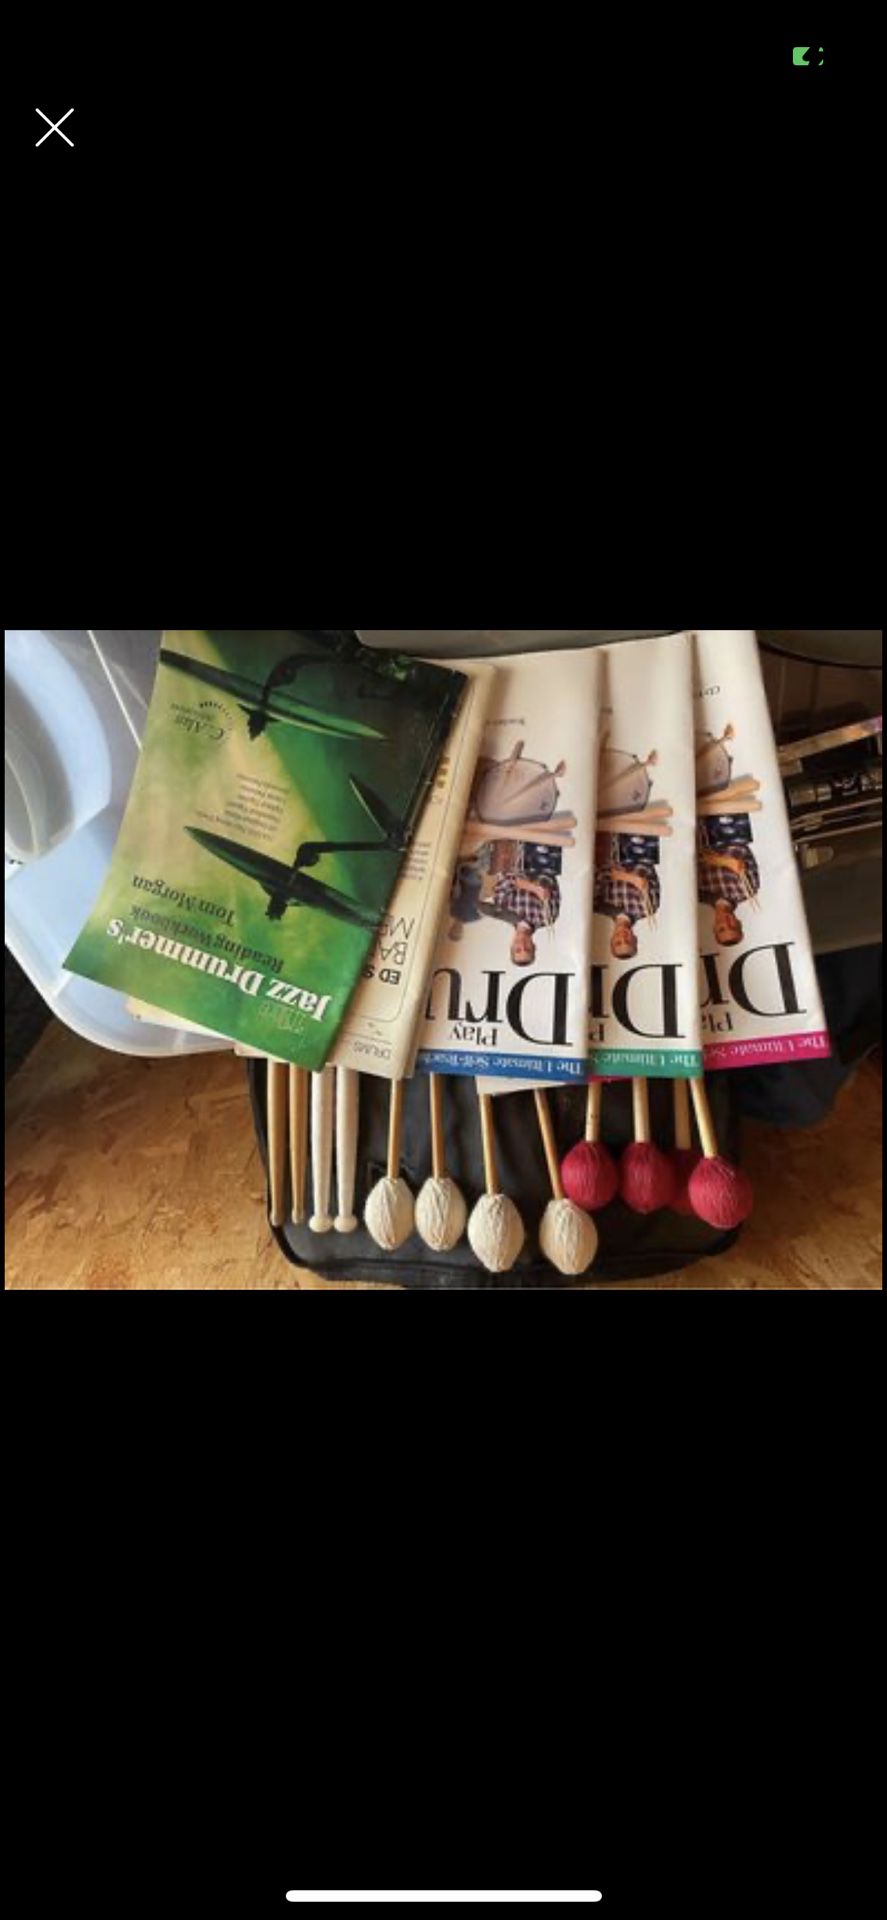 Drum Sticks, Mallets And Books 